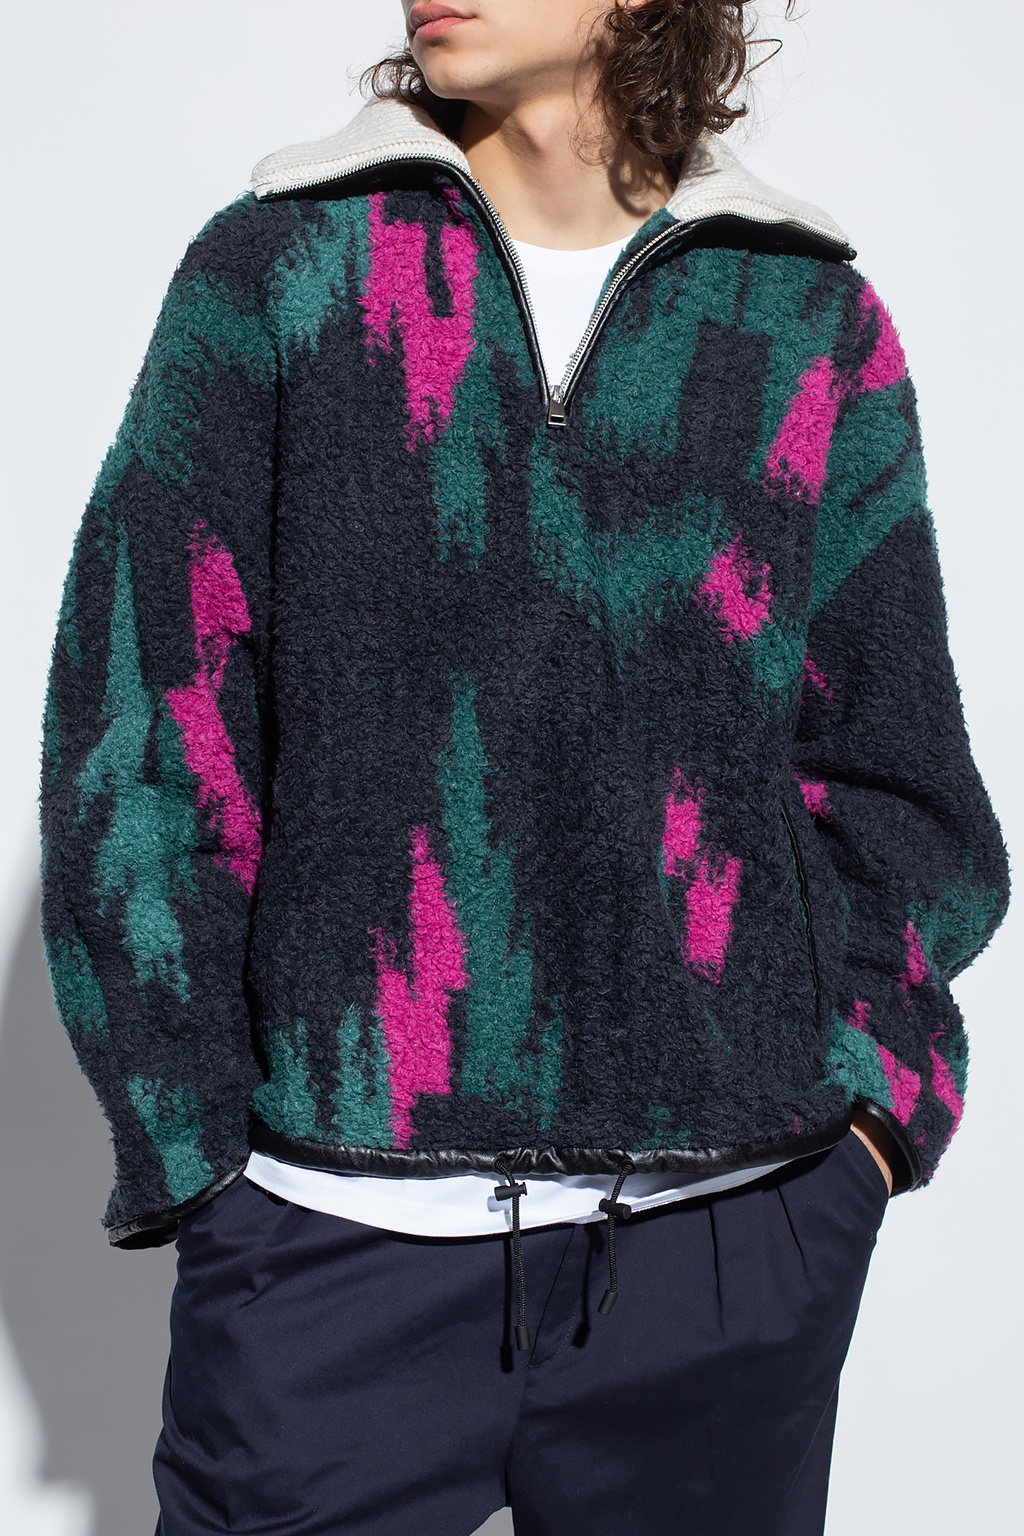 MARANT ‘Marlon’ sweatshirt with zipped collar